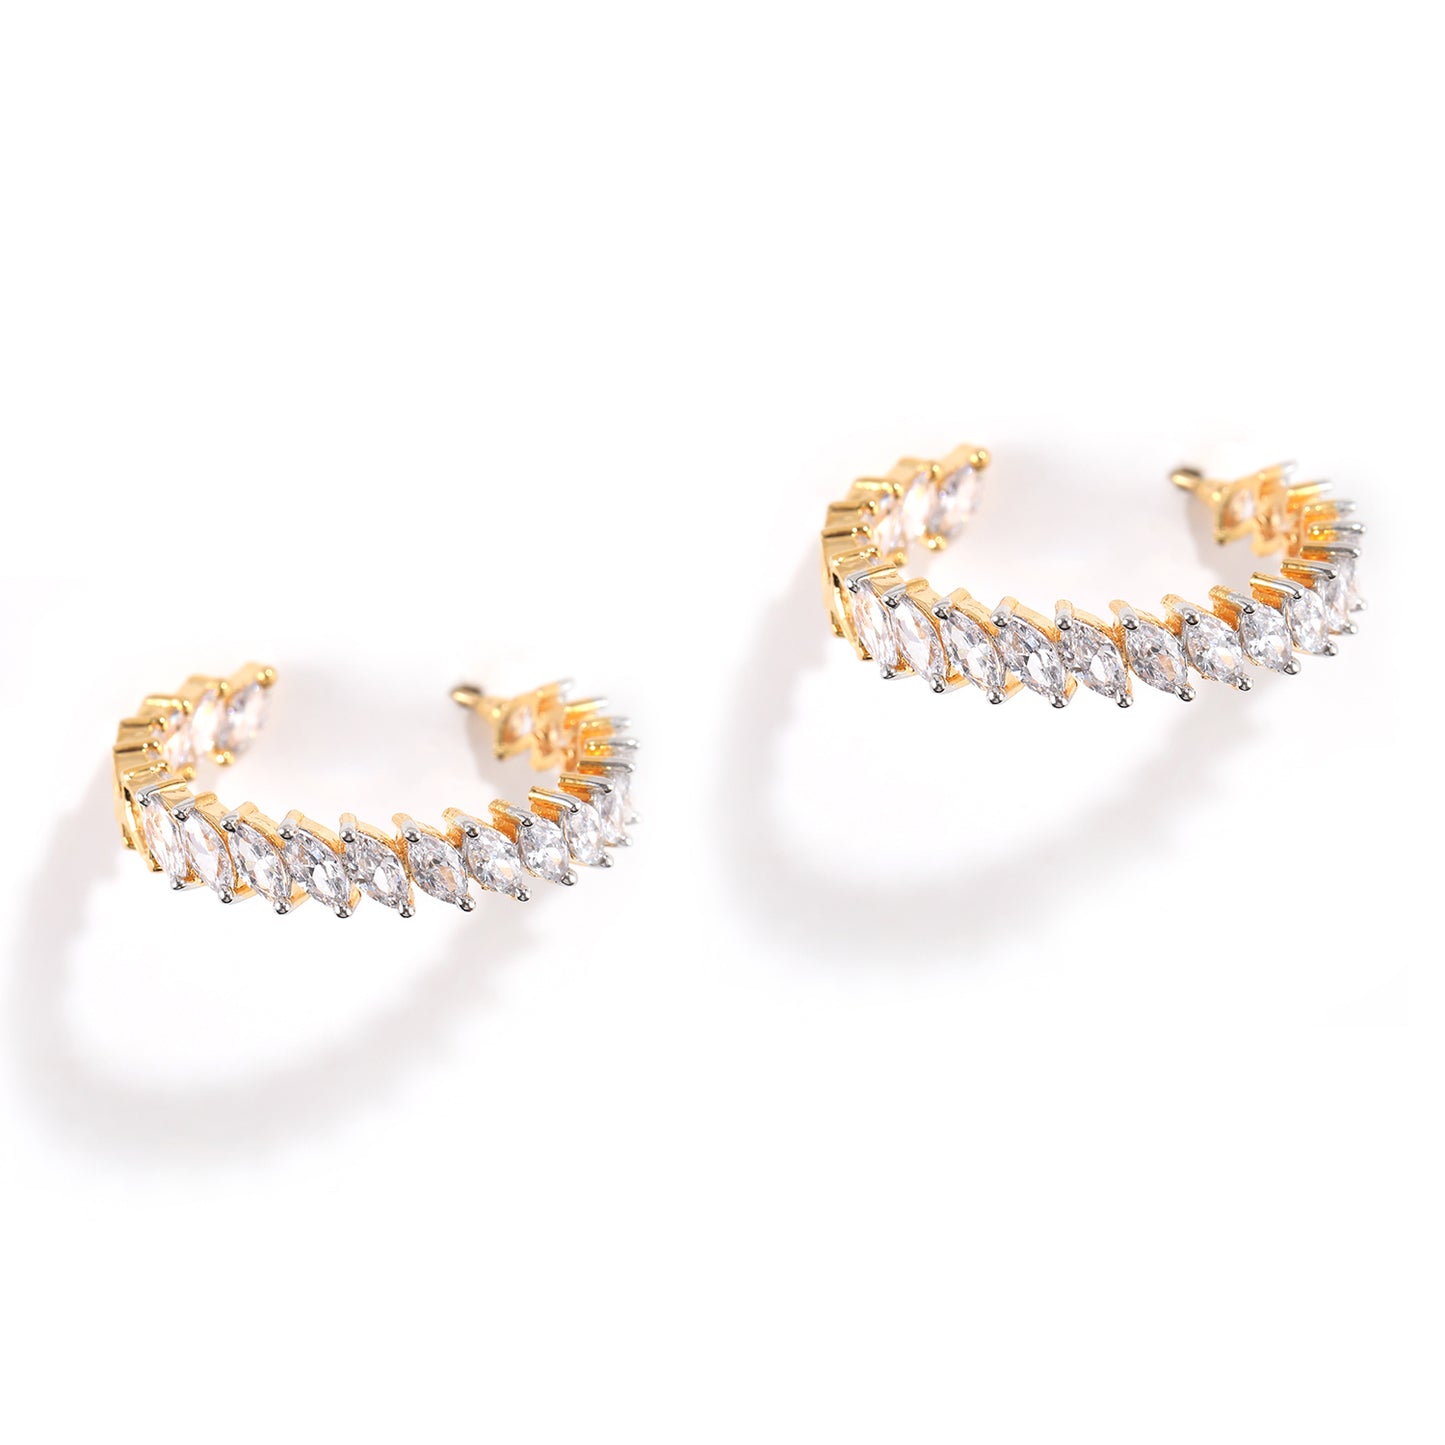 Gold and American Diamond Classic Hoops Earrings